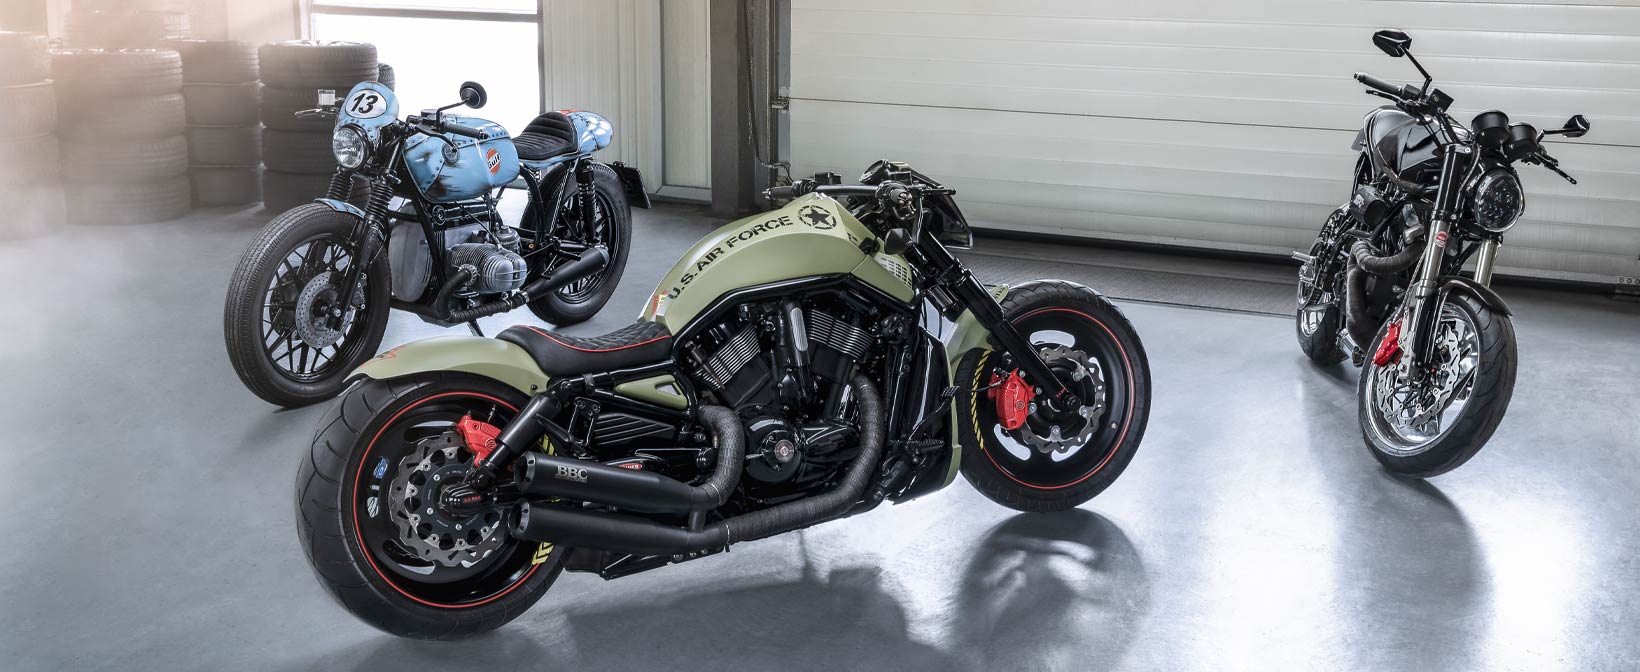 Bullock Custom Bikes / Harley, BMW